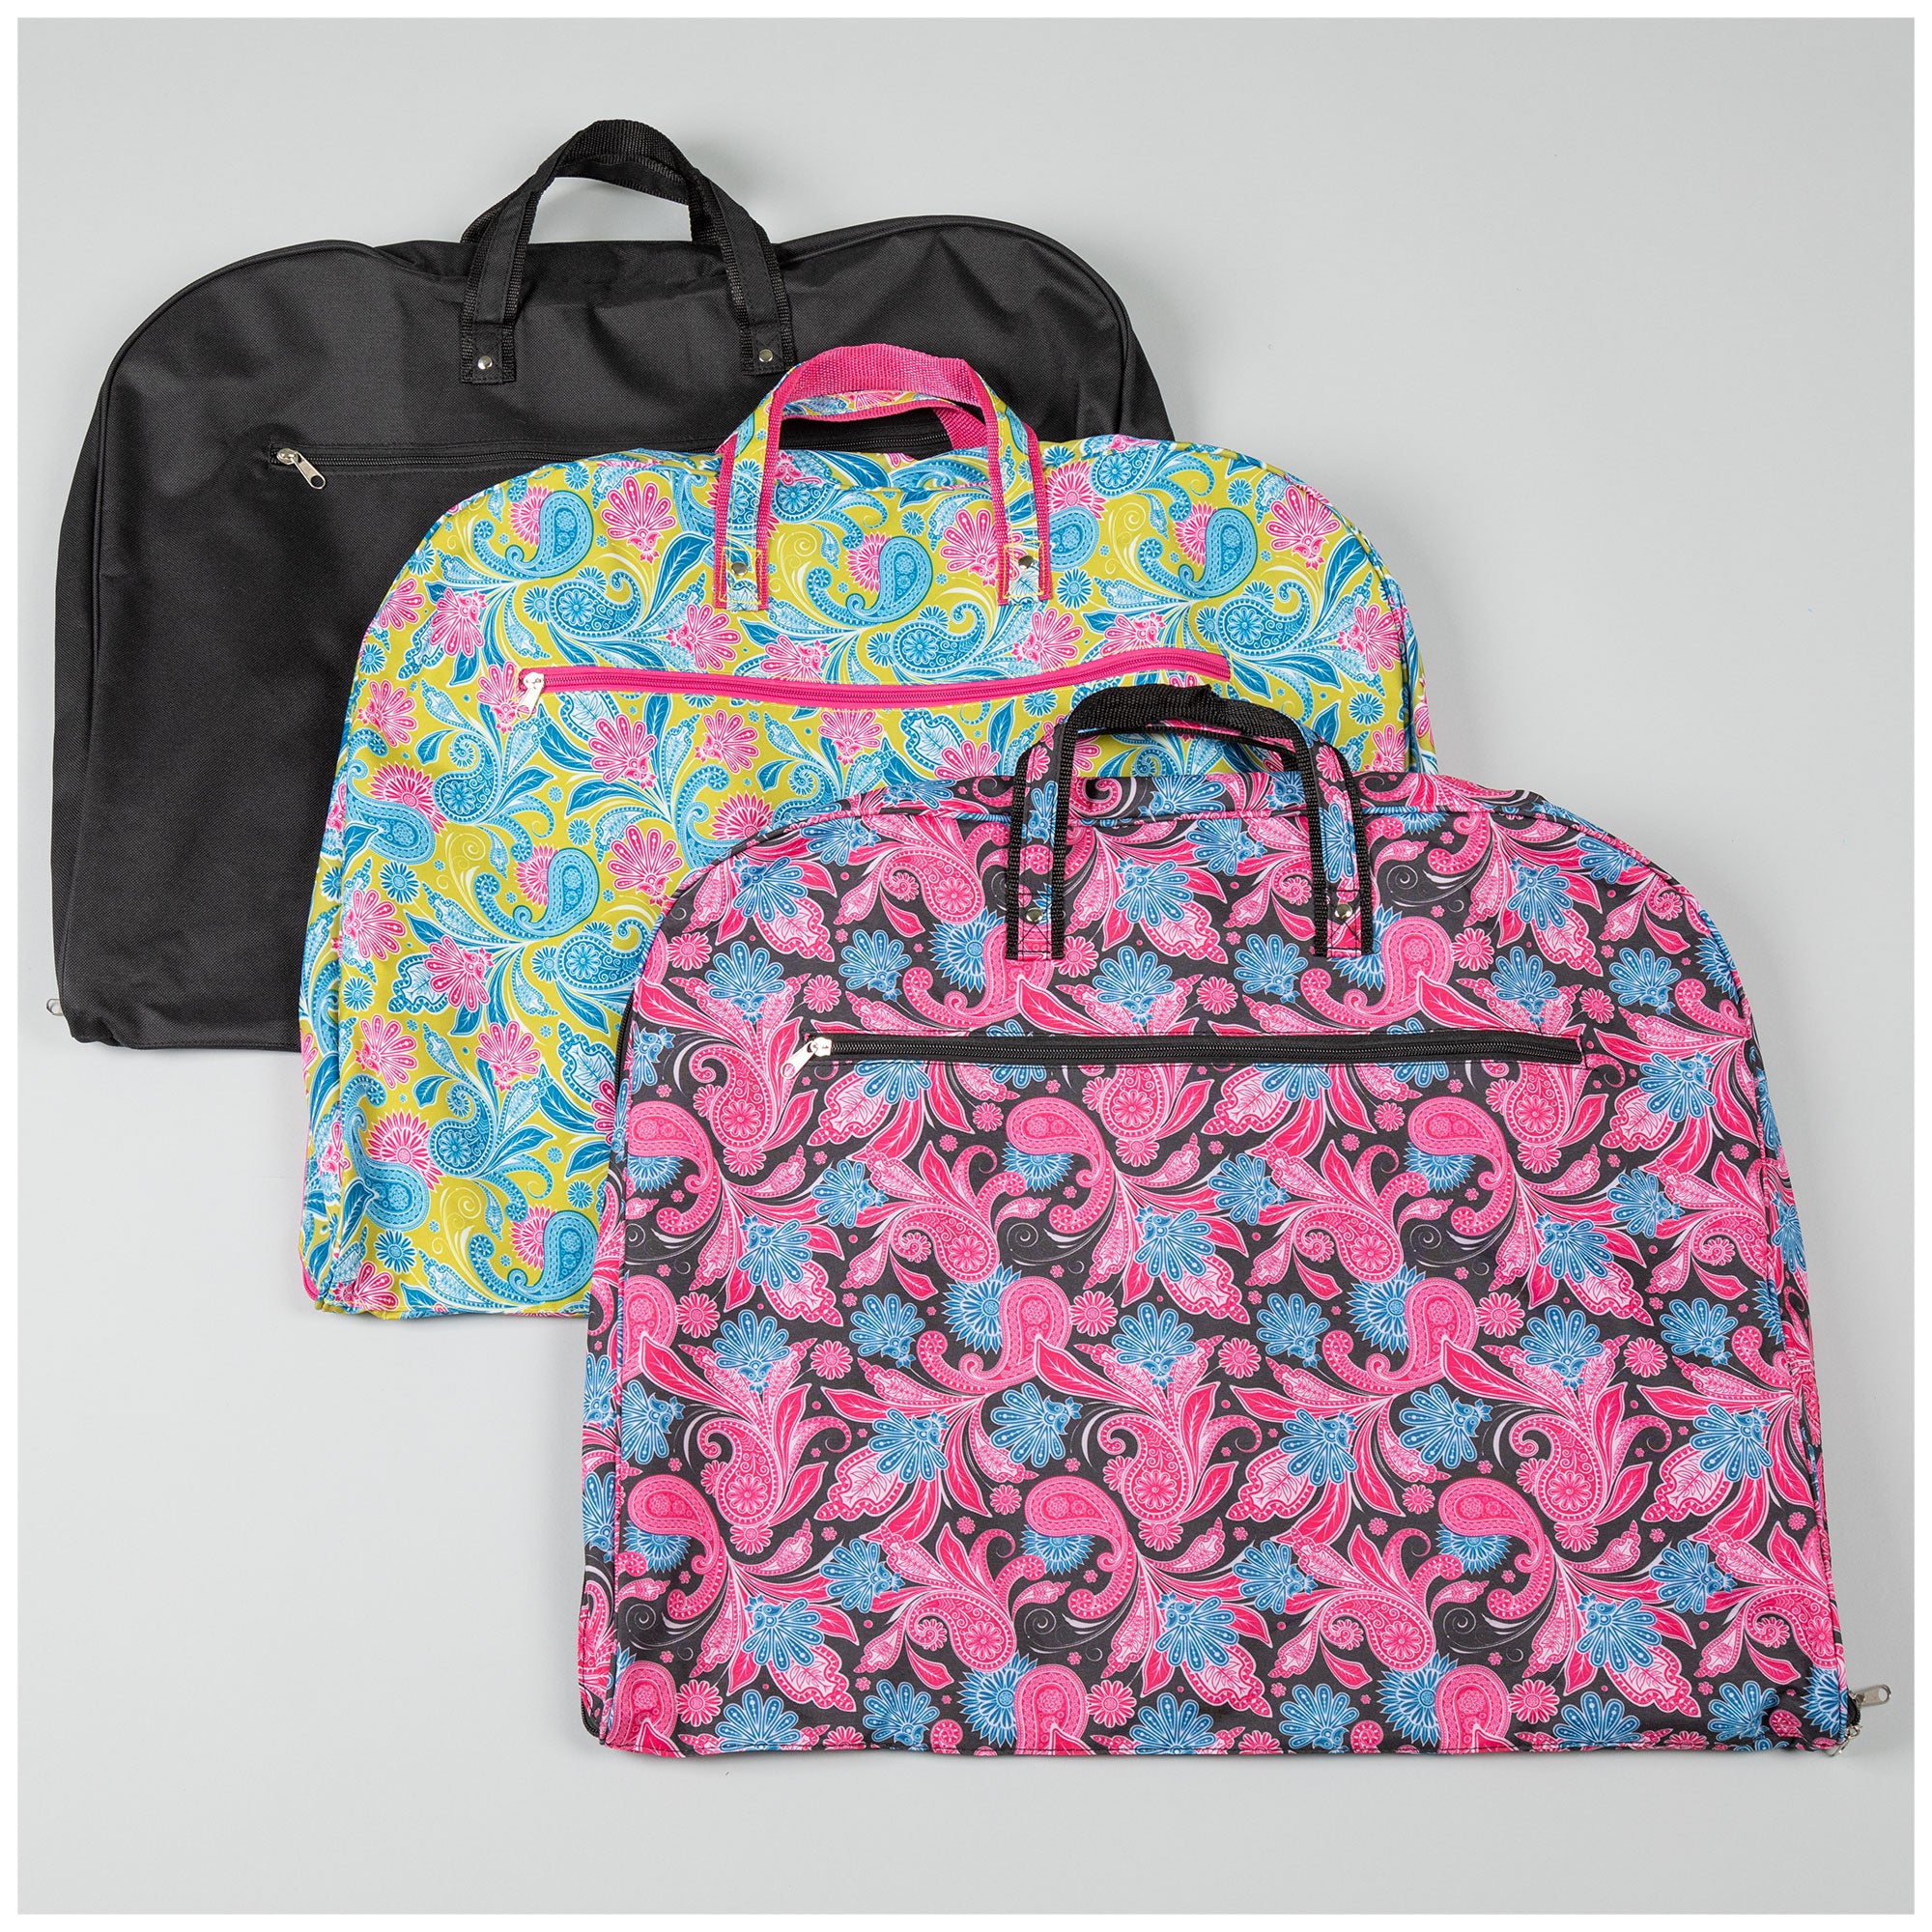 Microfiber Travel Garment Bag - Green Pink Paisley